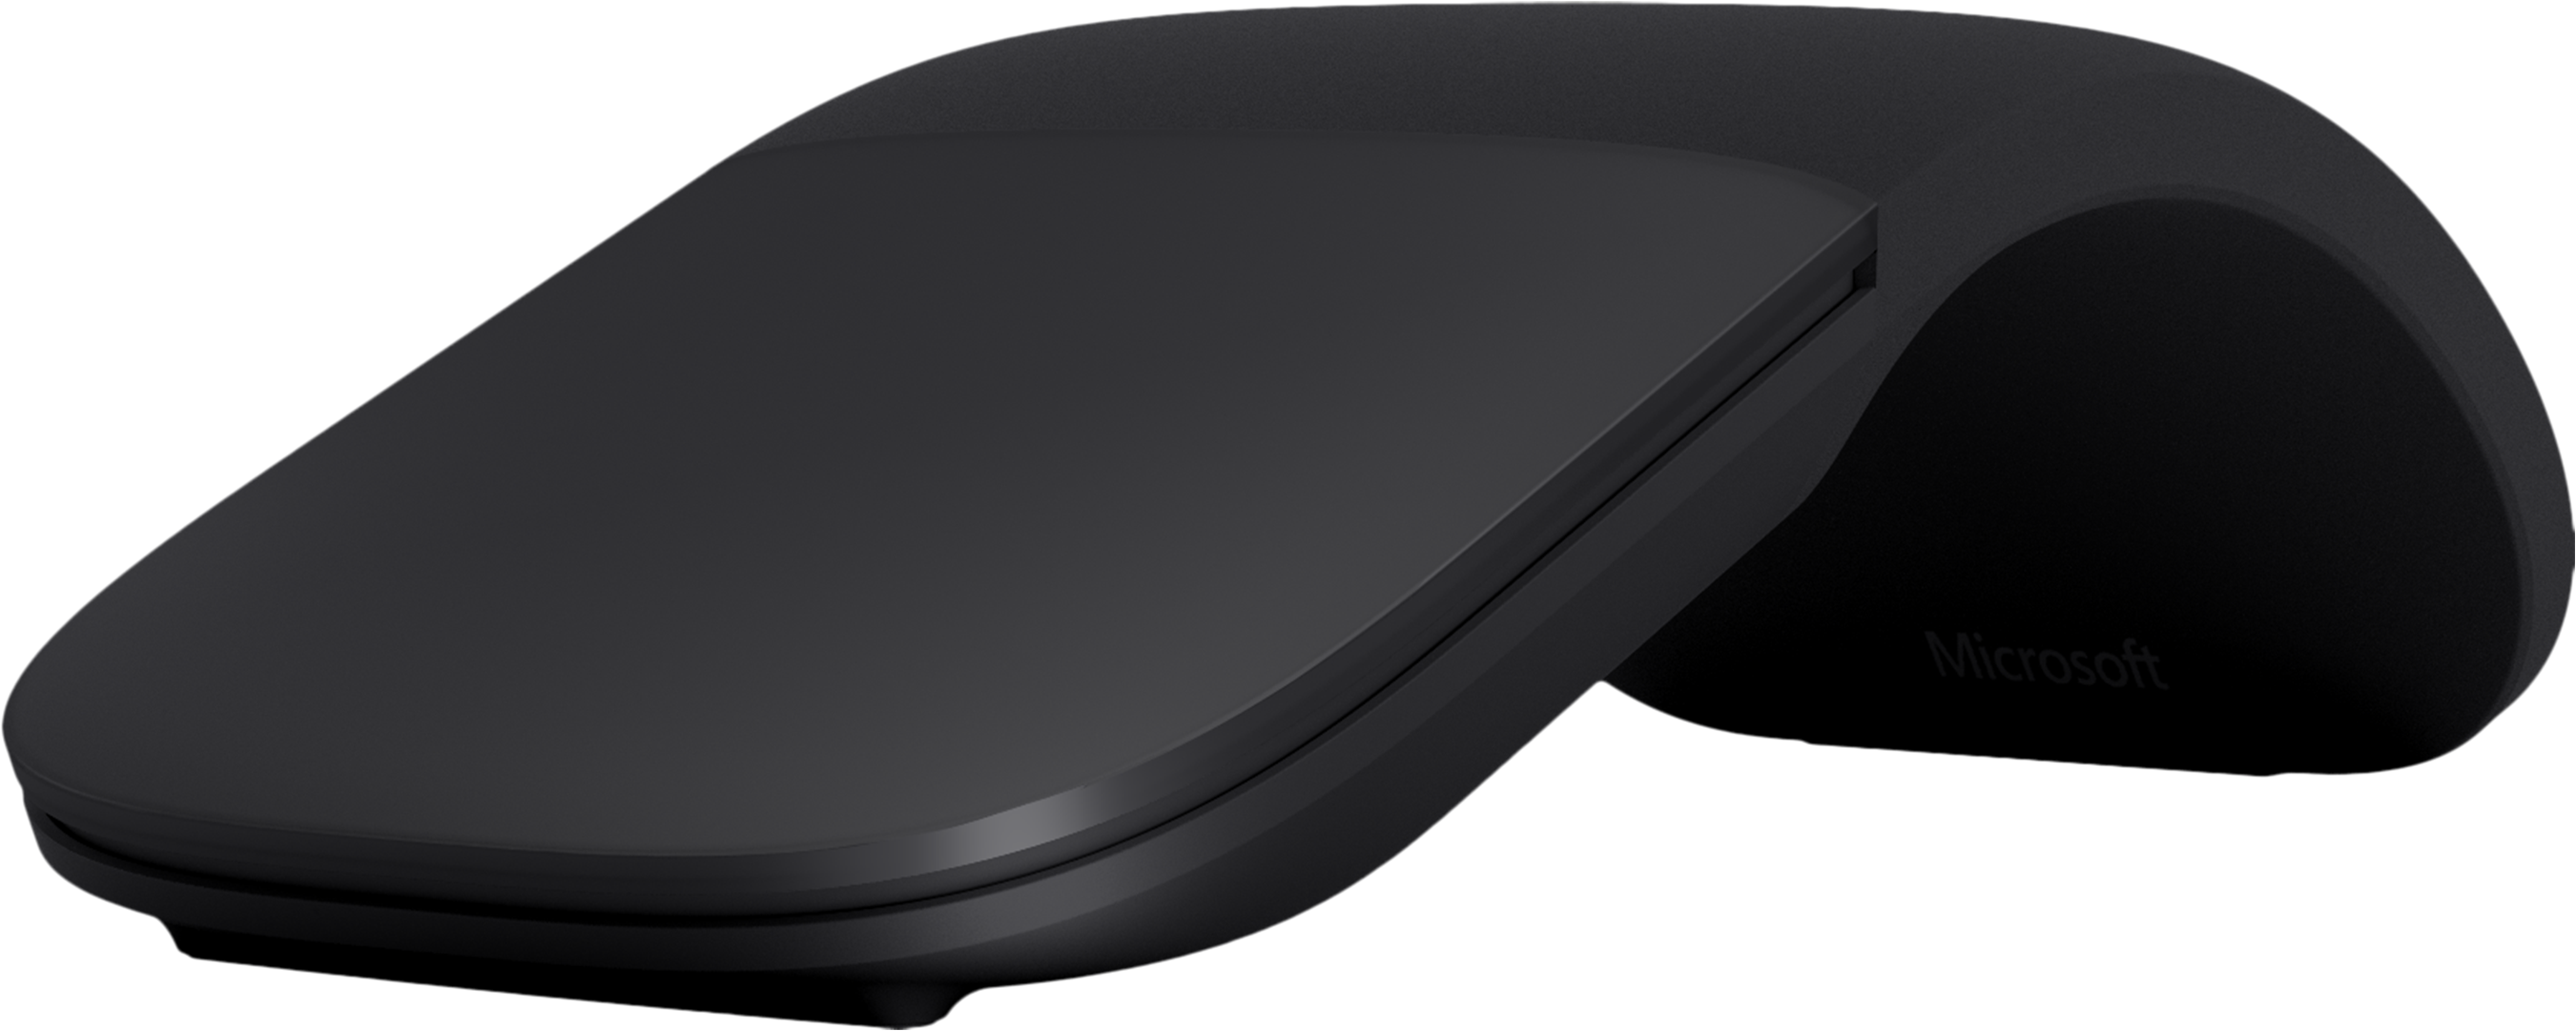 Commercial Surface Arc Mouse - Black